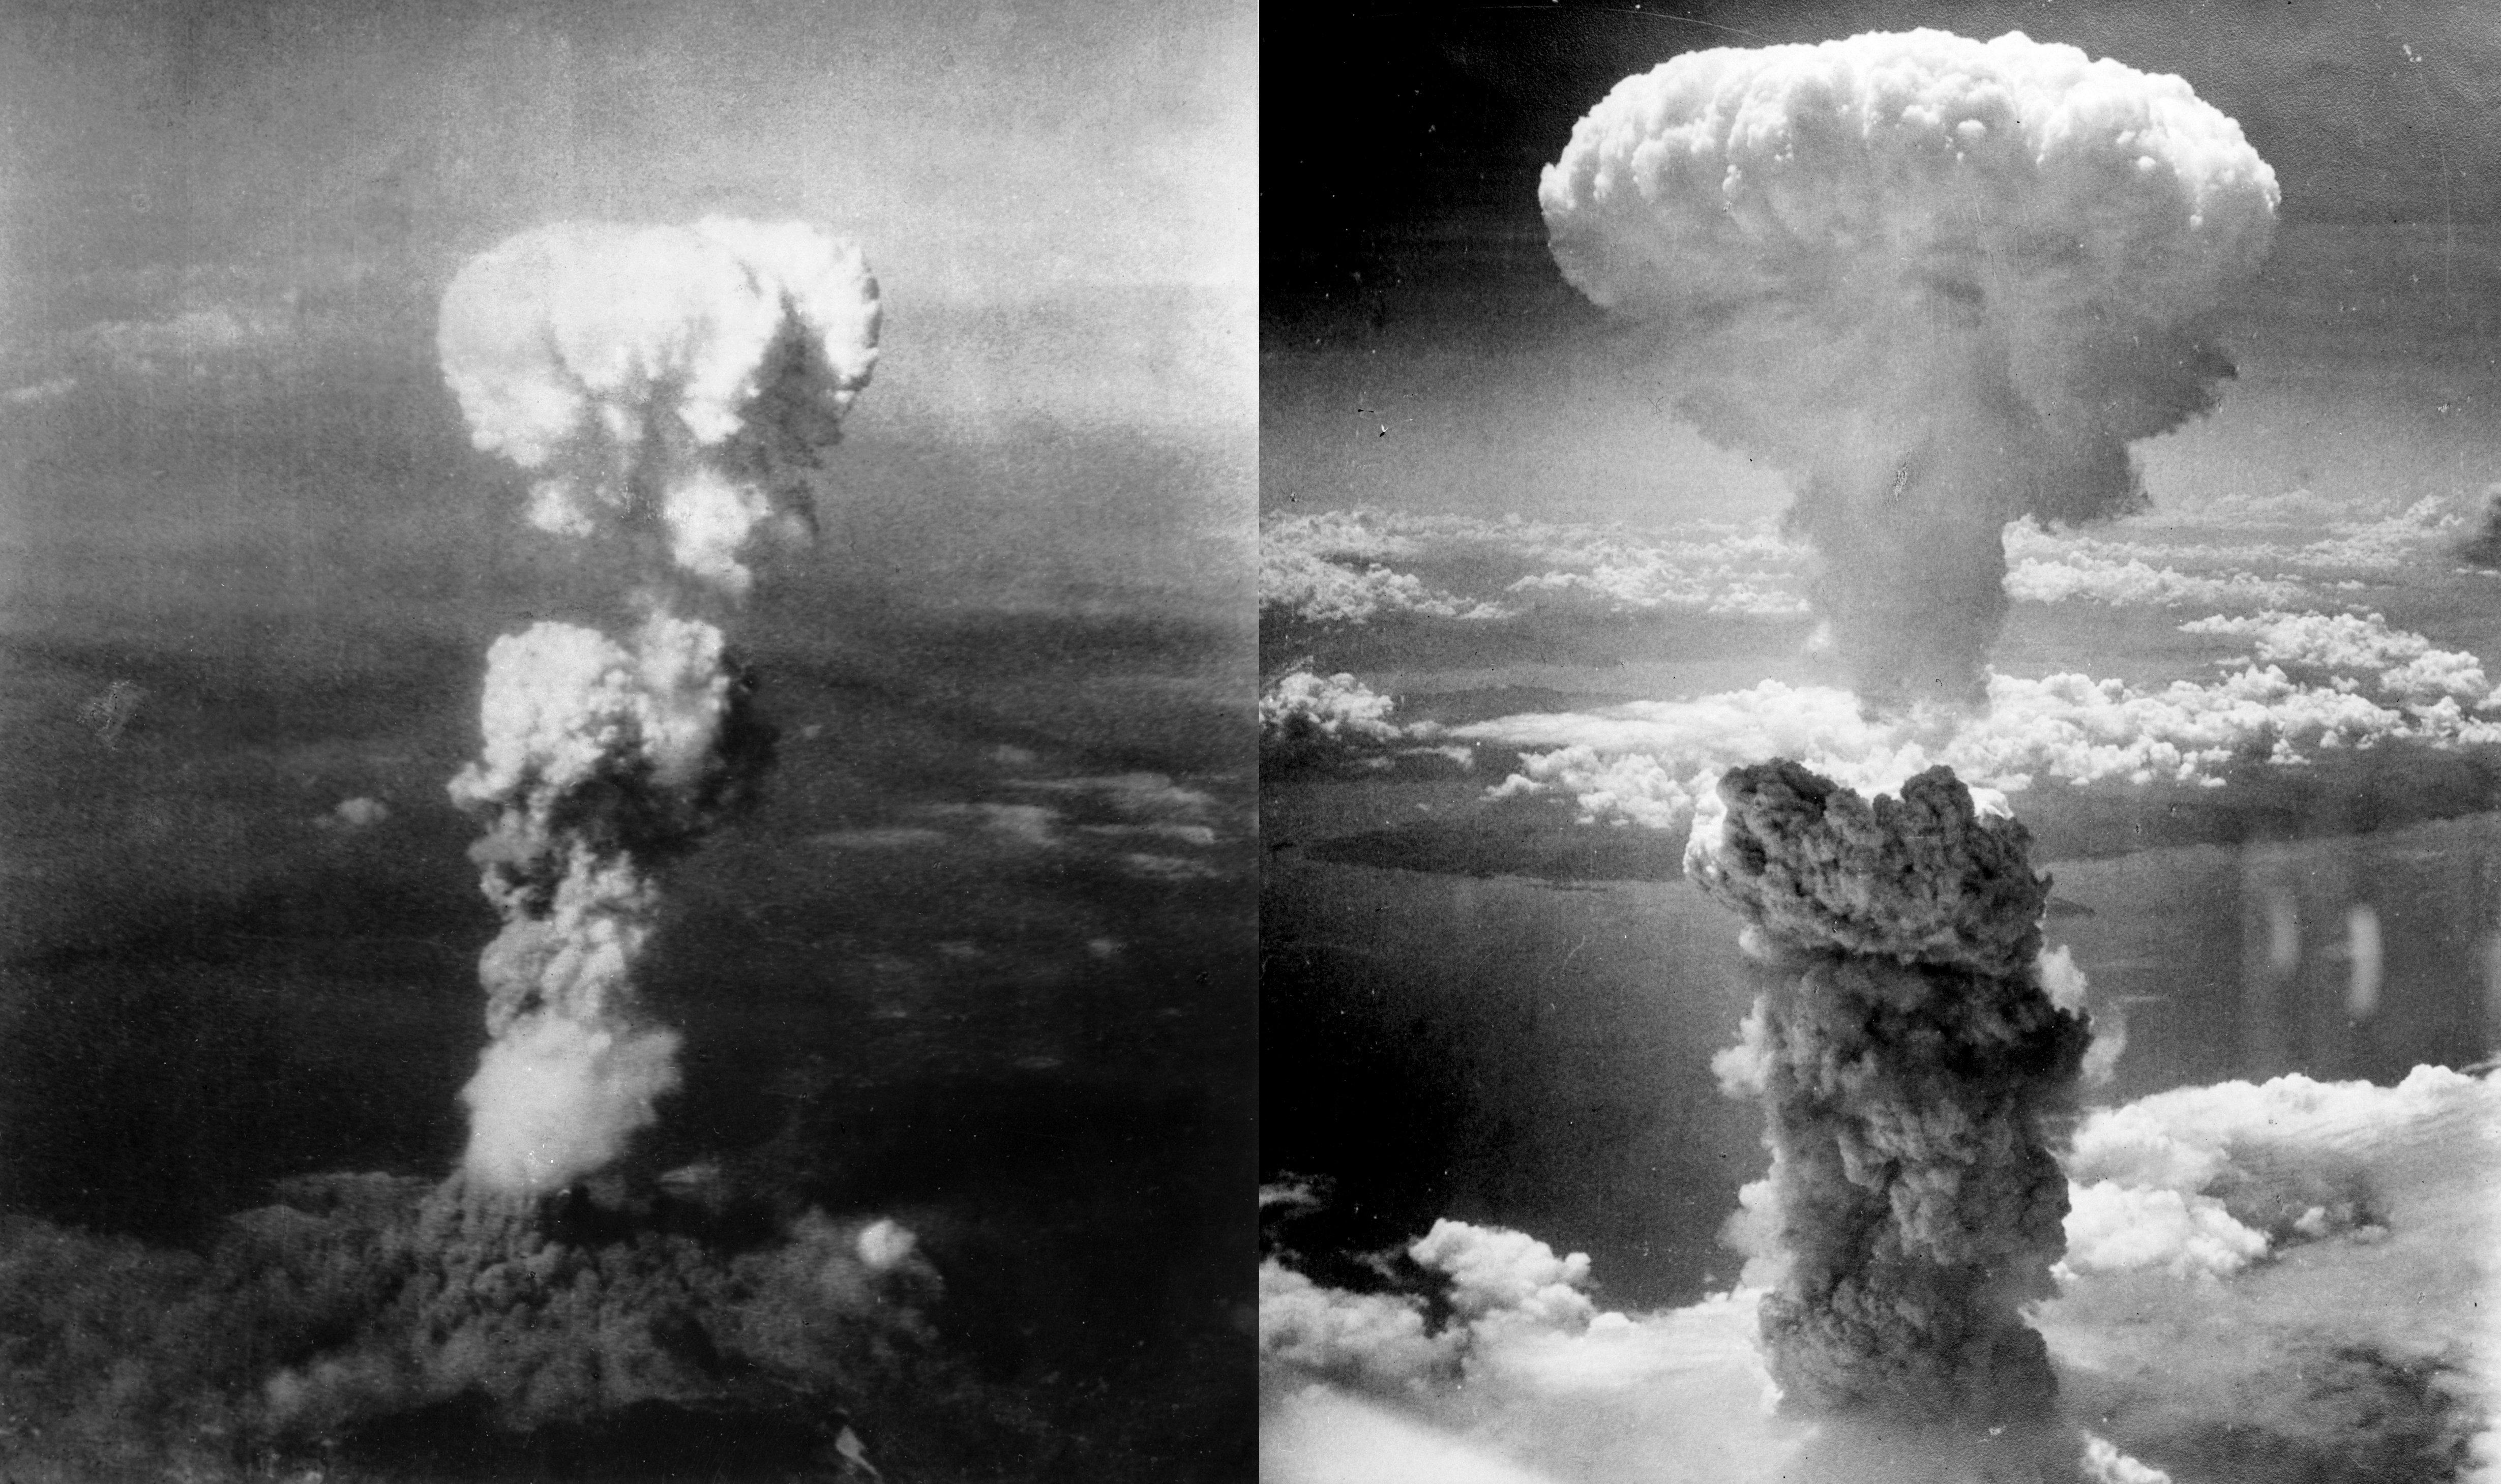 https://upload.wikimedia.org/wikipedia/commons/5/54/Atomic_bombing_of_Japan.jpg